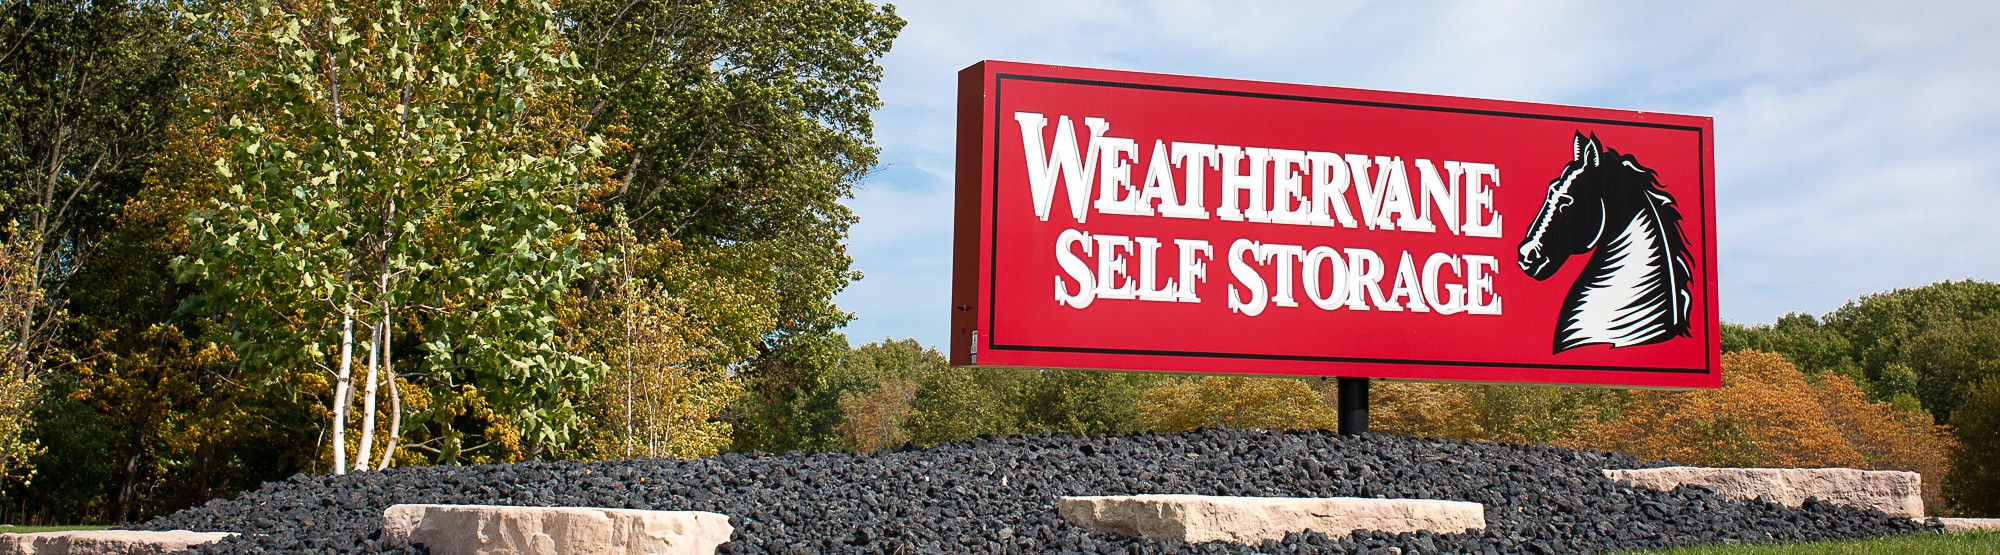 Weathervane Self Storage in Portage, MI